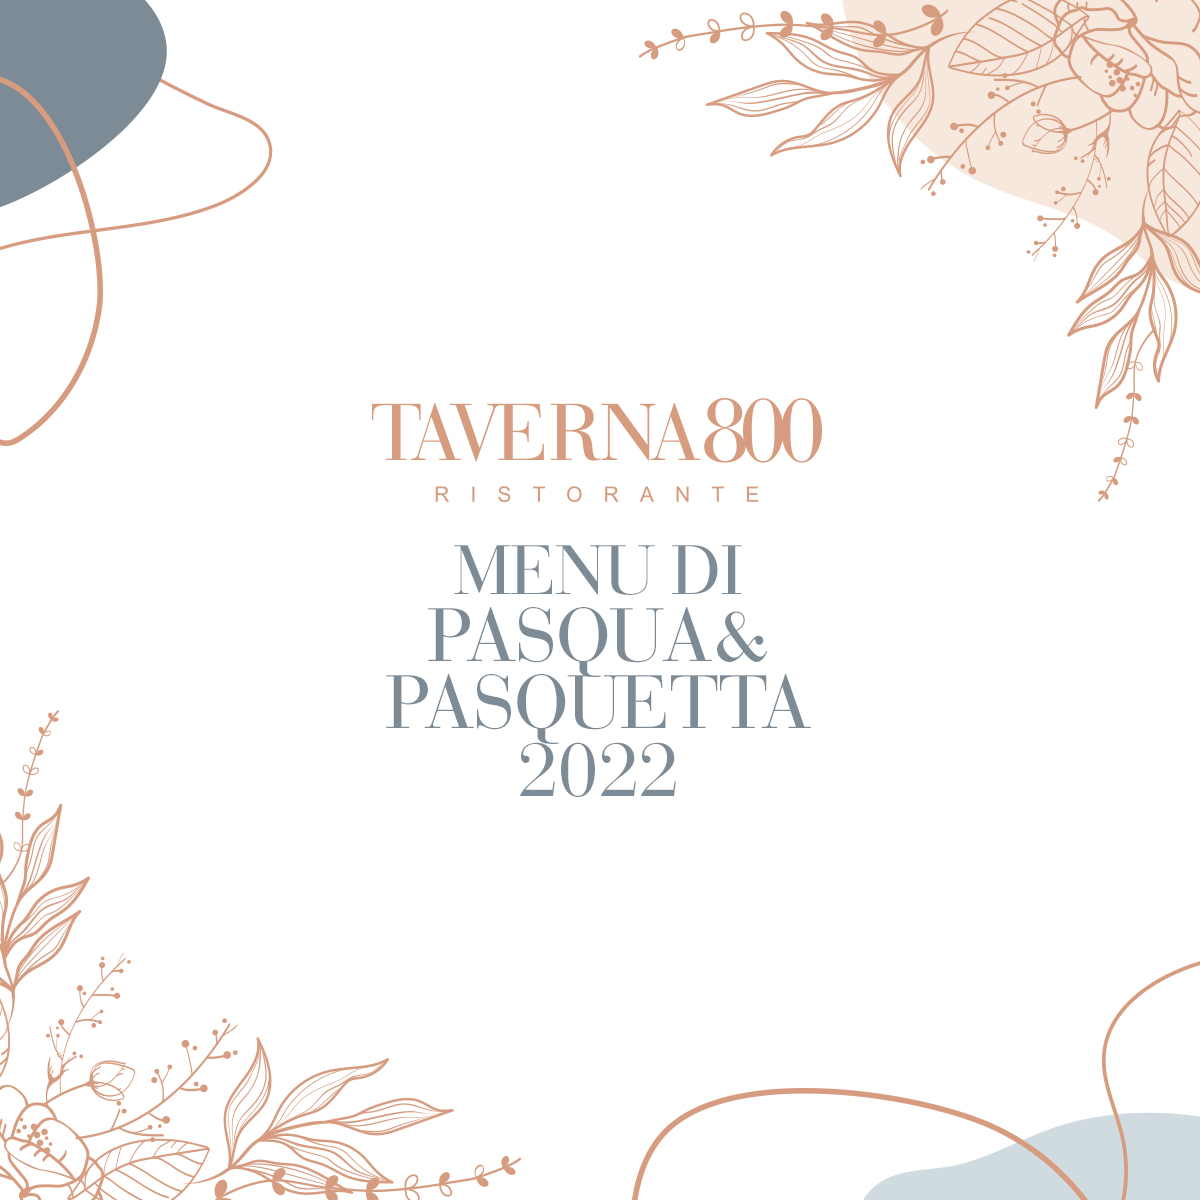 Taverna 800 - Menu Pasqua e Pasquetta 2022